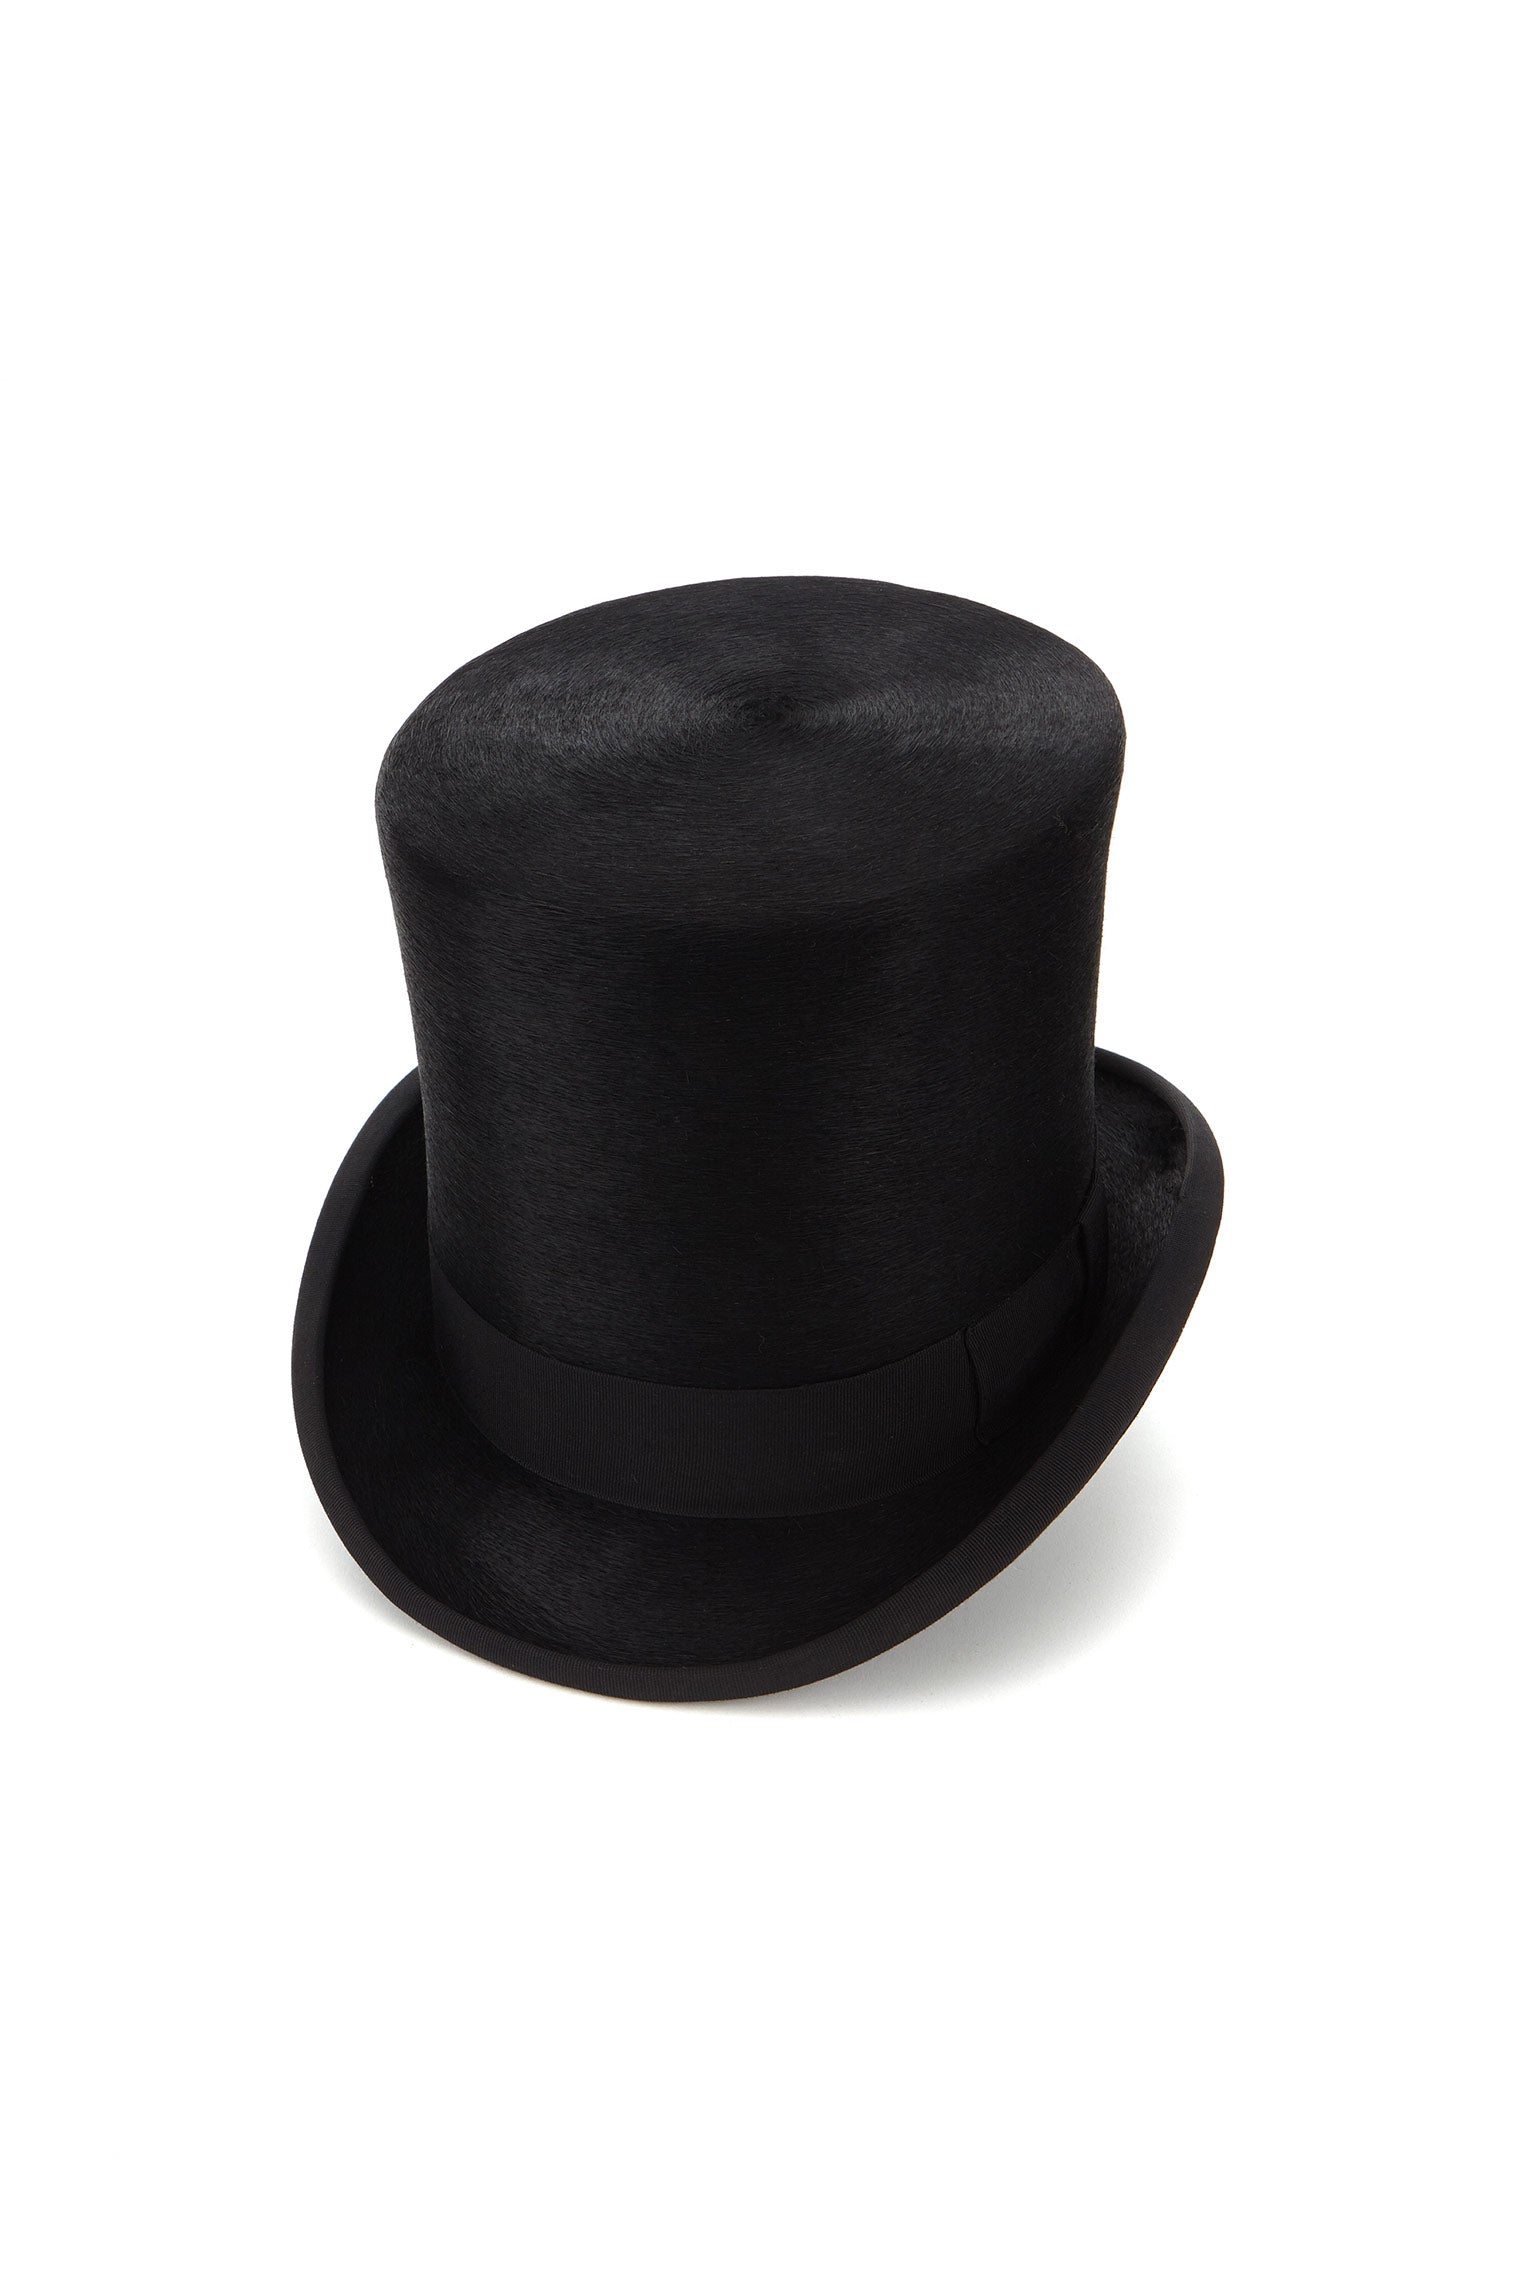 BLACK FELT HIGH-CROWN TOP HAT